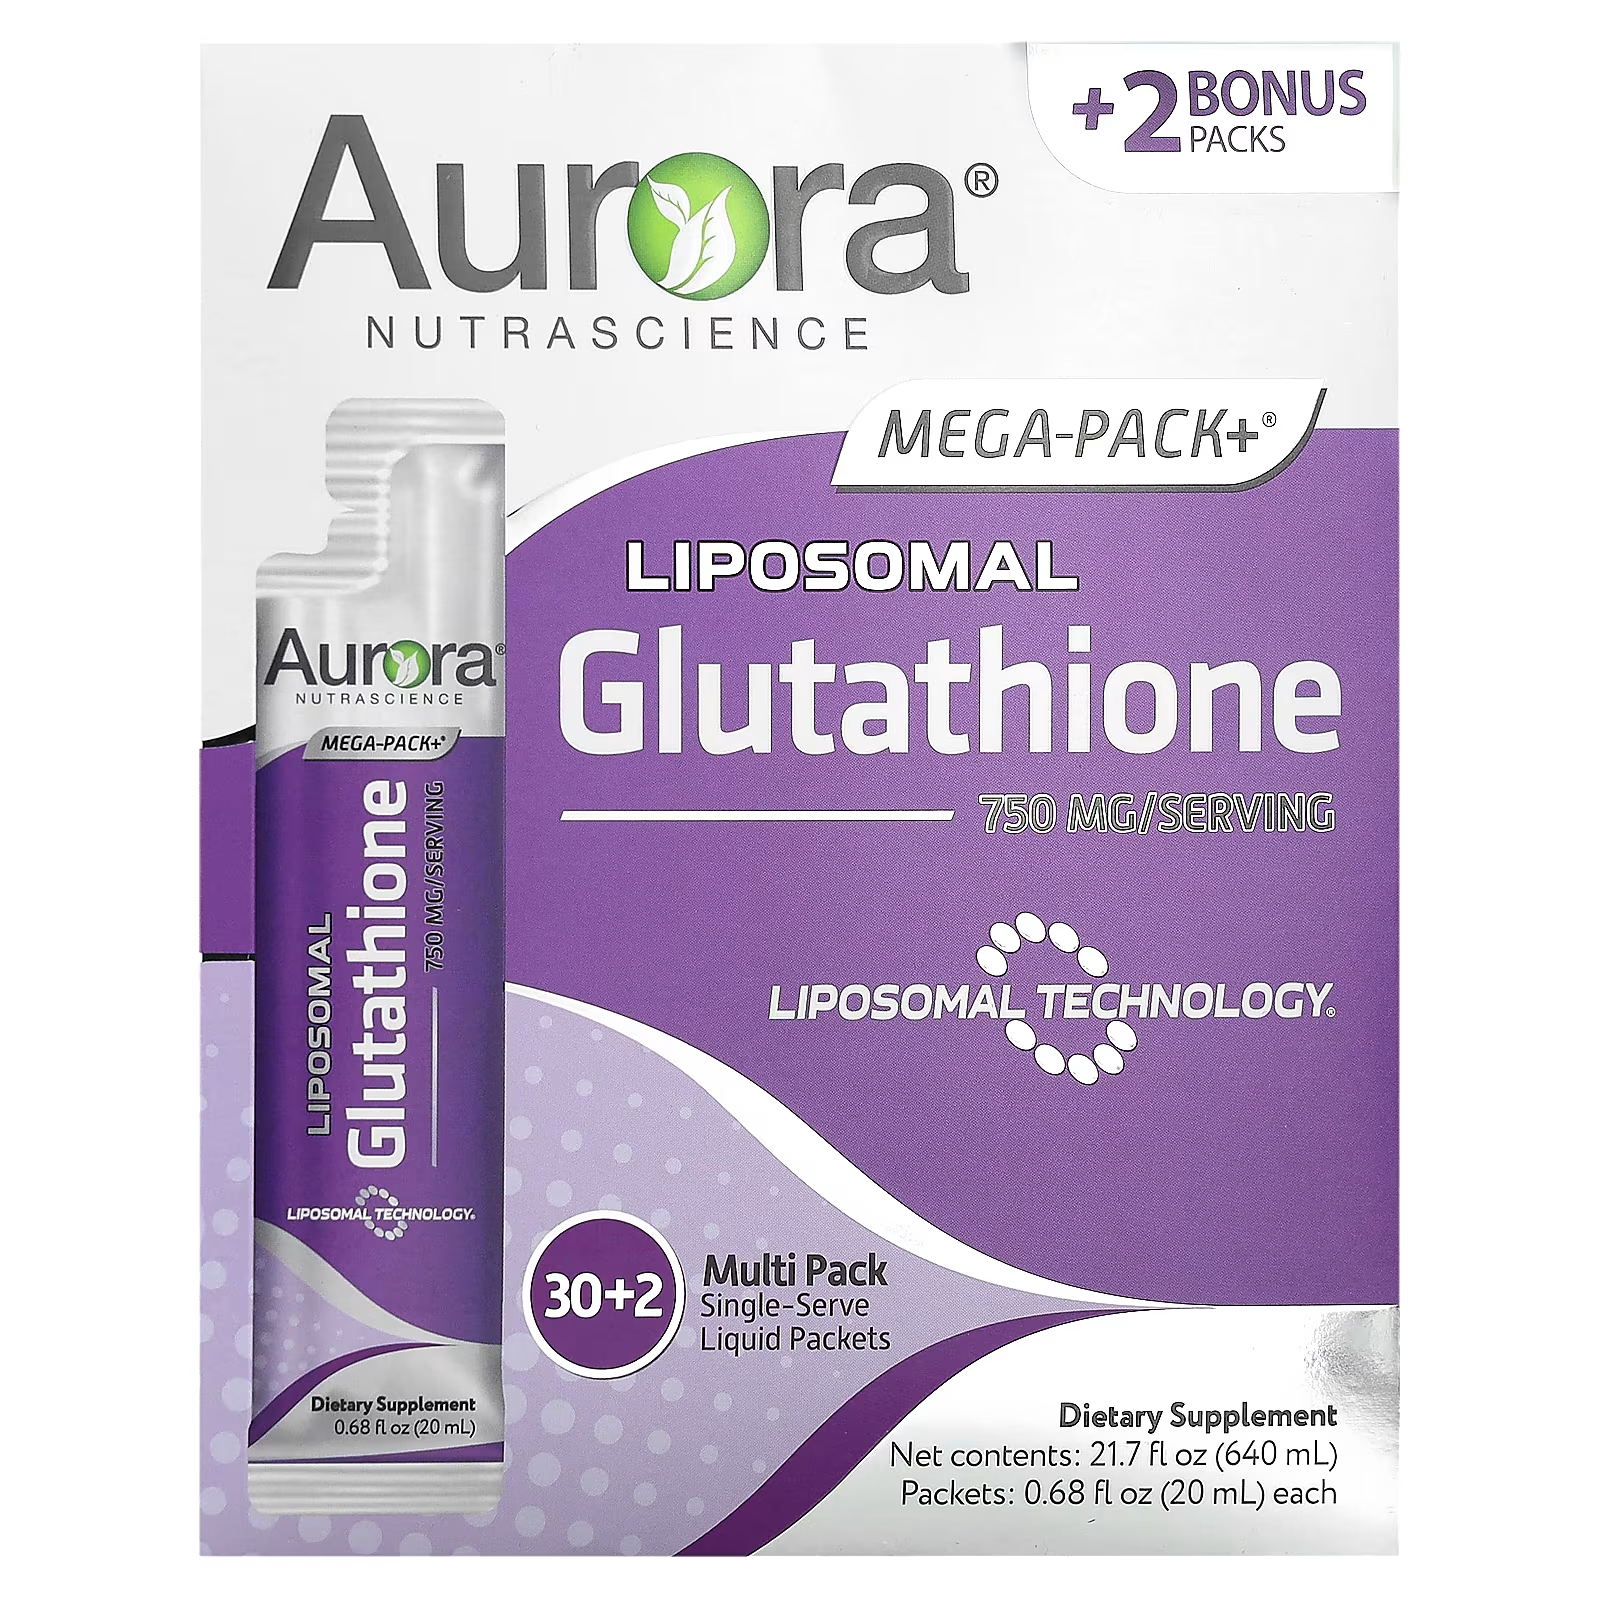 Aurora Nutrascience Mega-Pack+ липосомальный глутатион 750 мг, 32 упаковки по 0,68 жидкой унции (20 мл) каждая биодобавка липосомальный глутатион 100мл